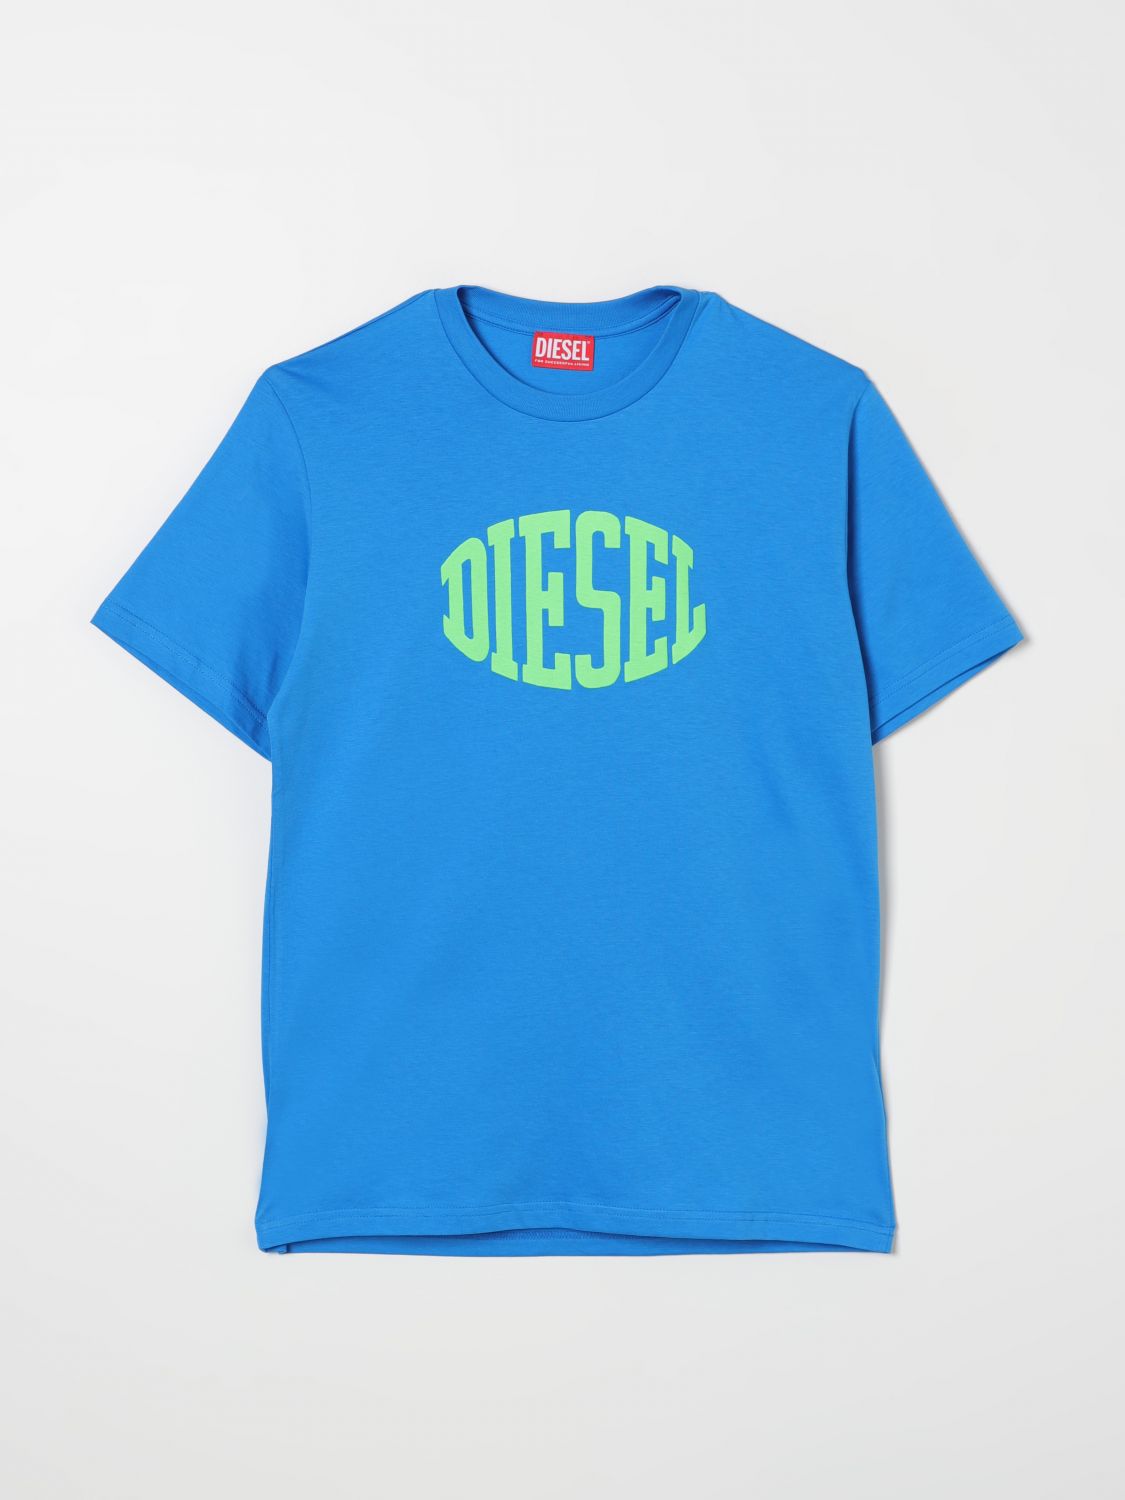 Diesel Diesel t-shirt with logo